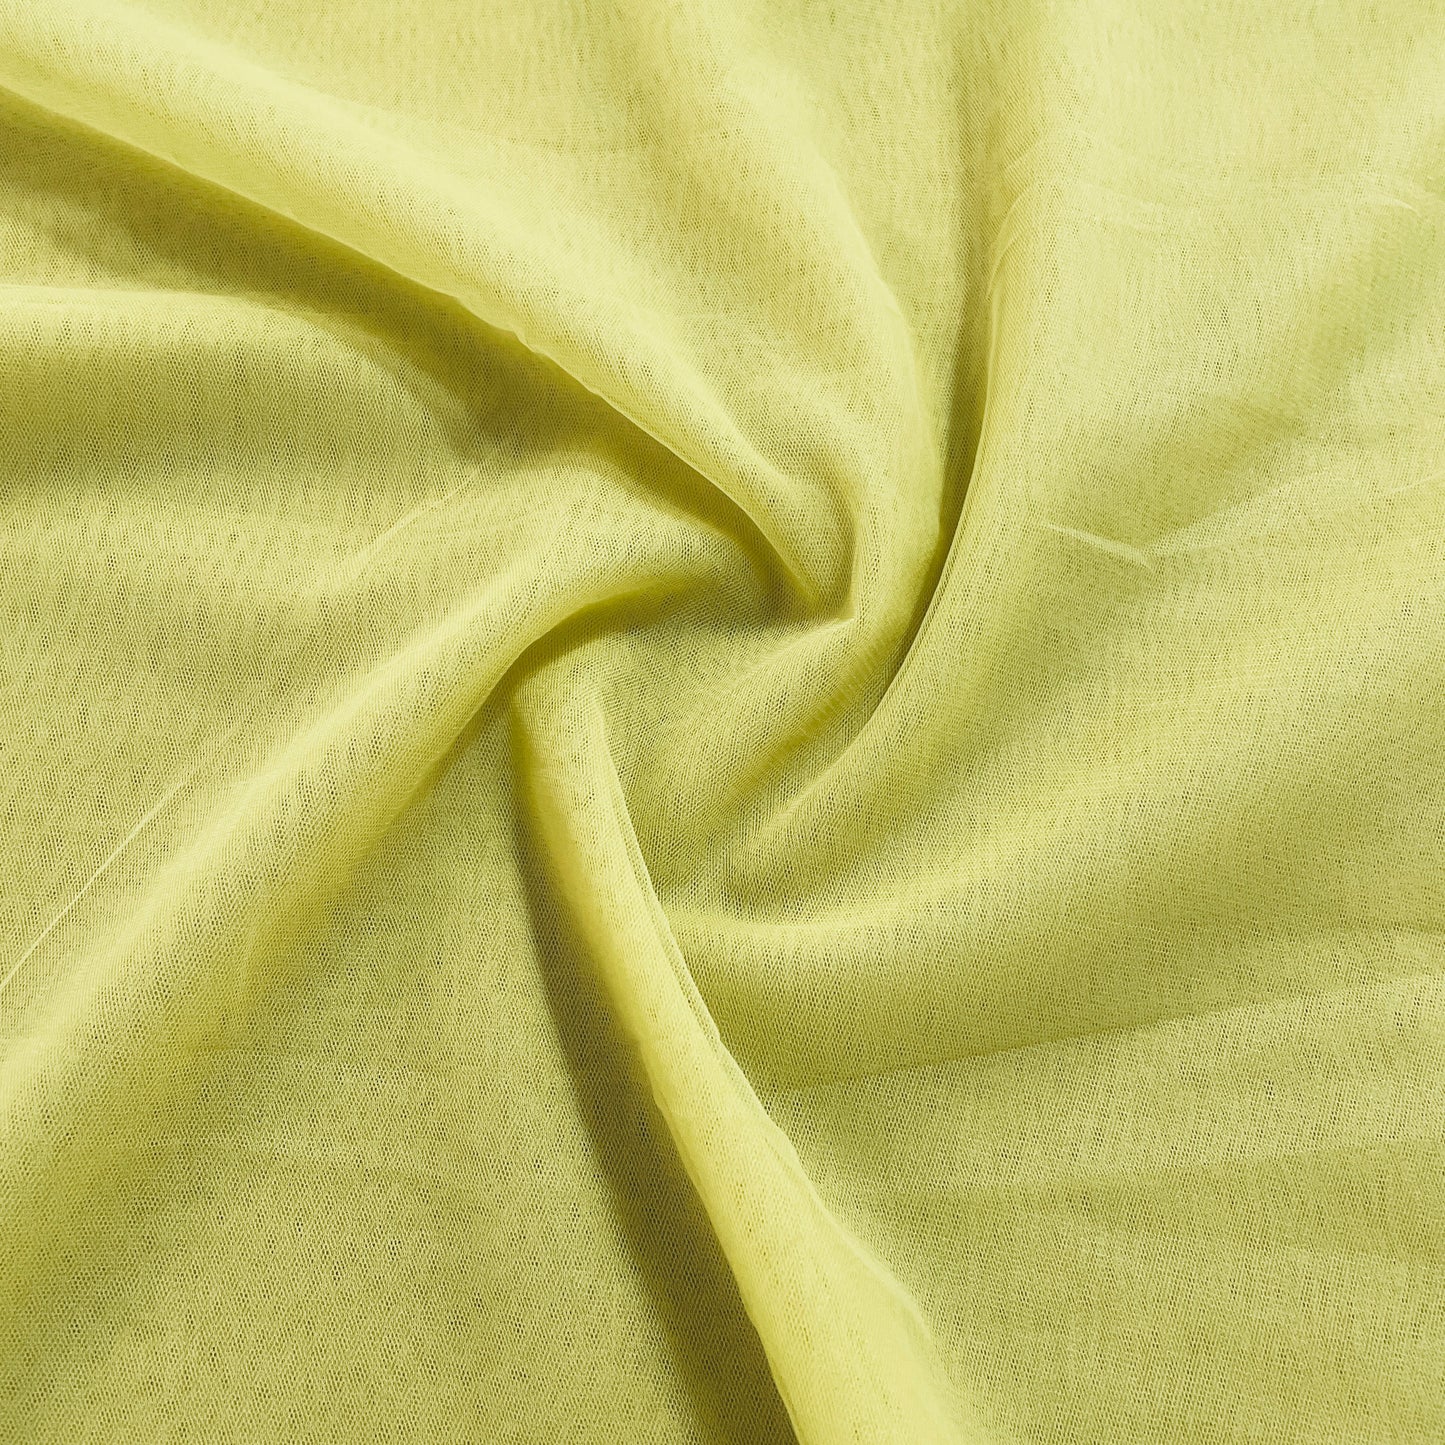 Lime Green Net Fabric - TradeUNO